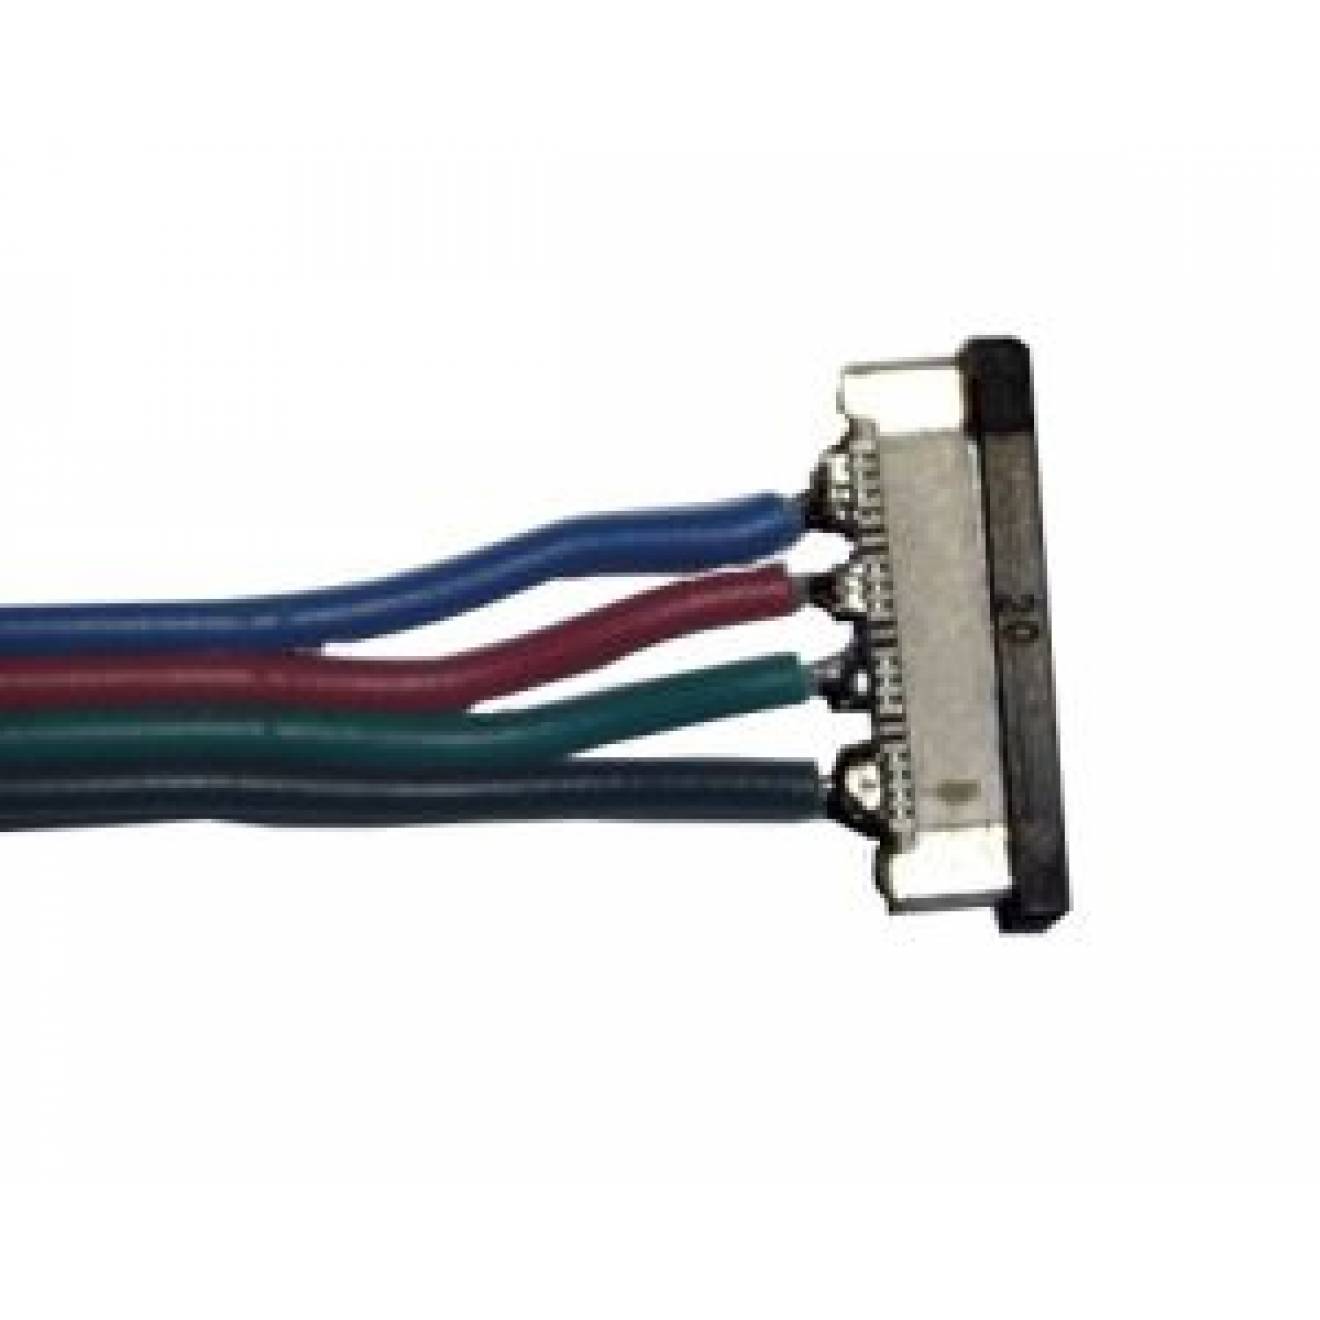 Anschlussstecker für RGB SMD LED Module, 4-polig